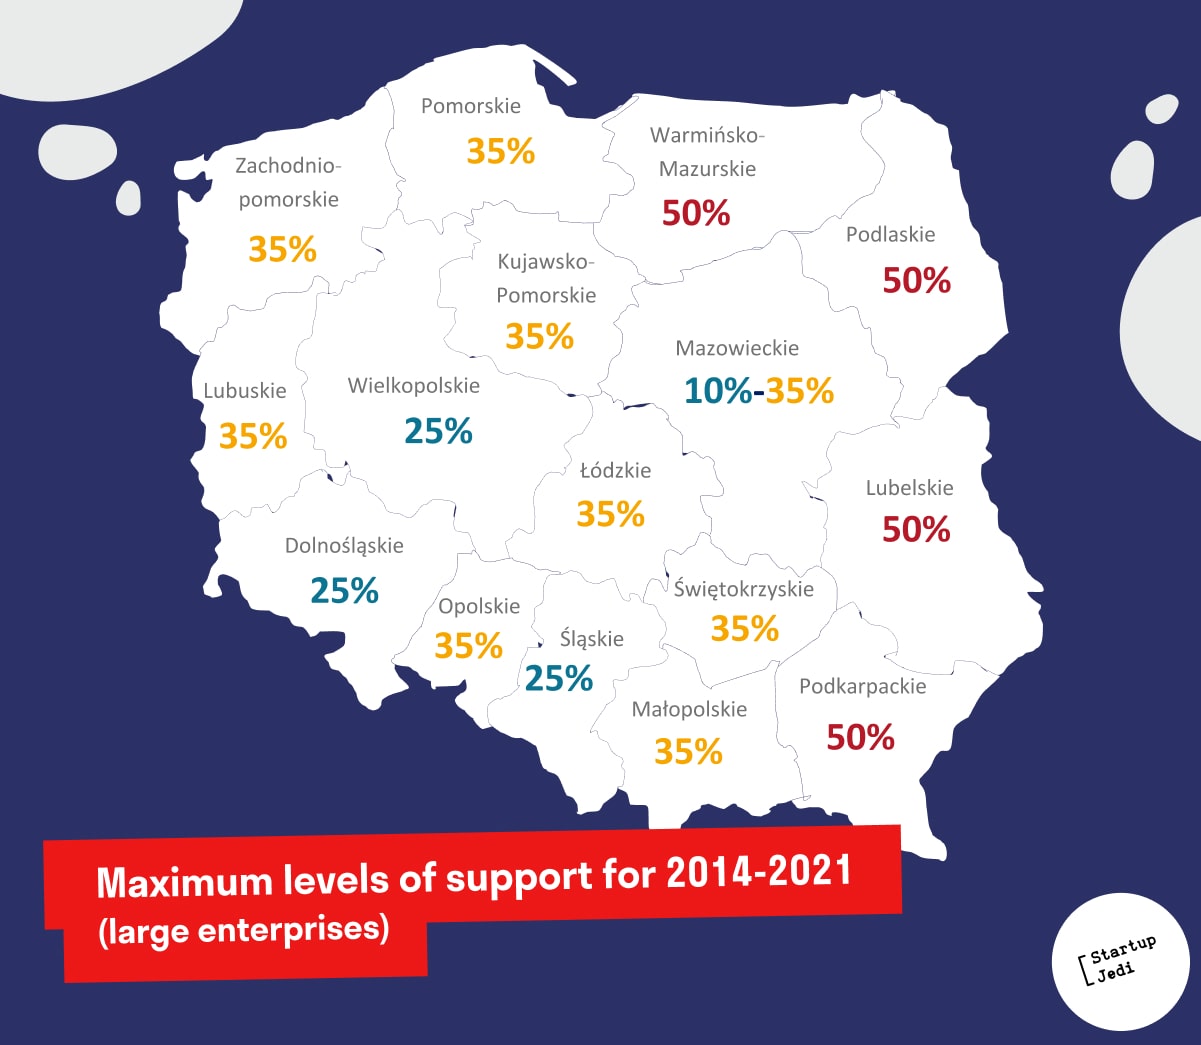 Maximum levels of support for 2014-2021 (large enterprises)